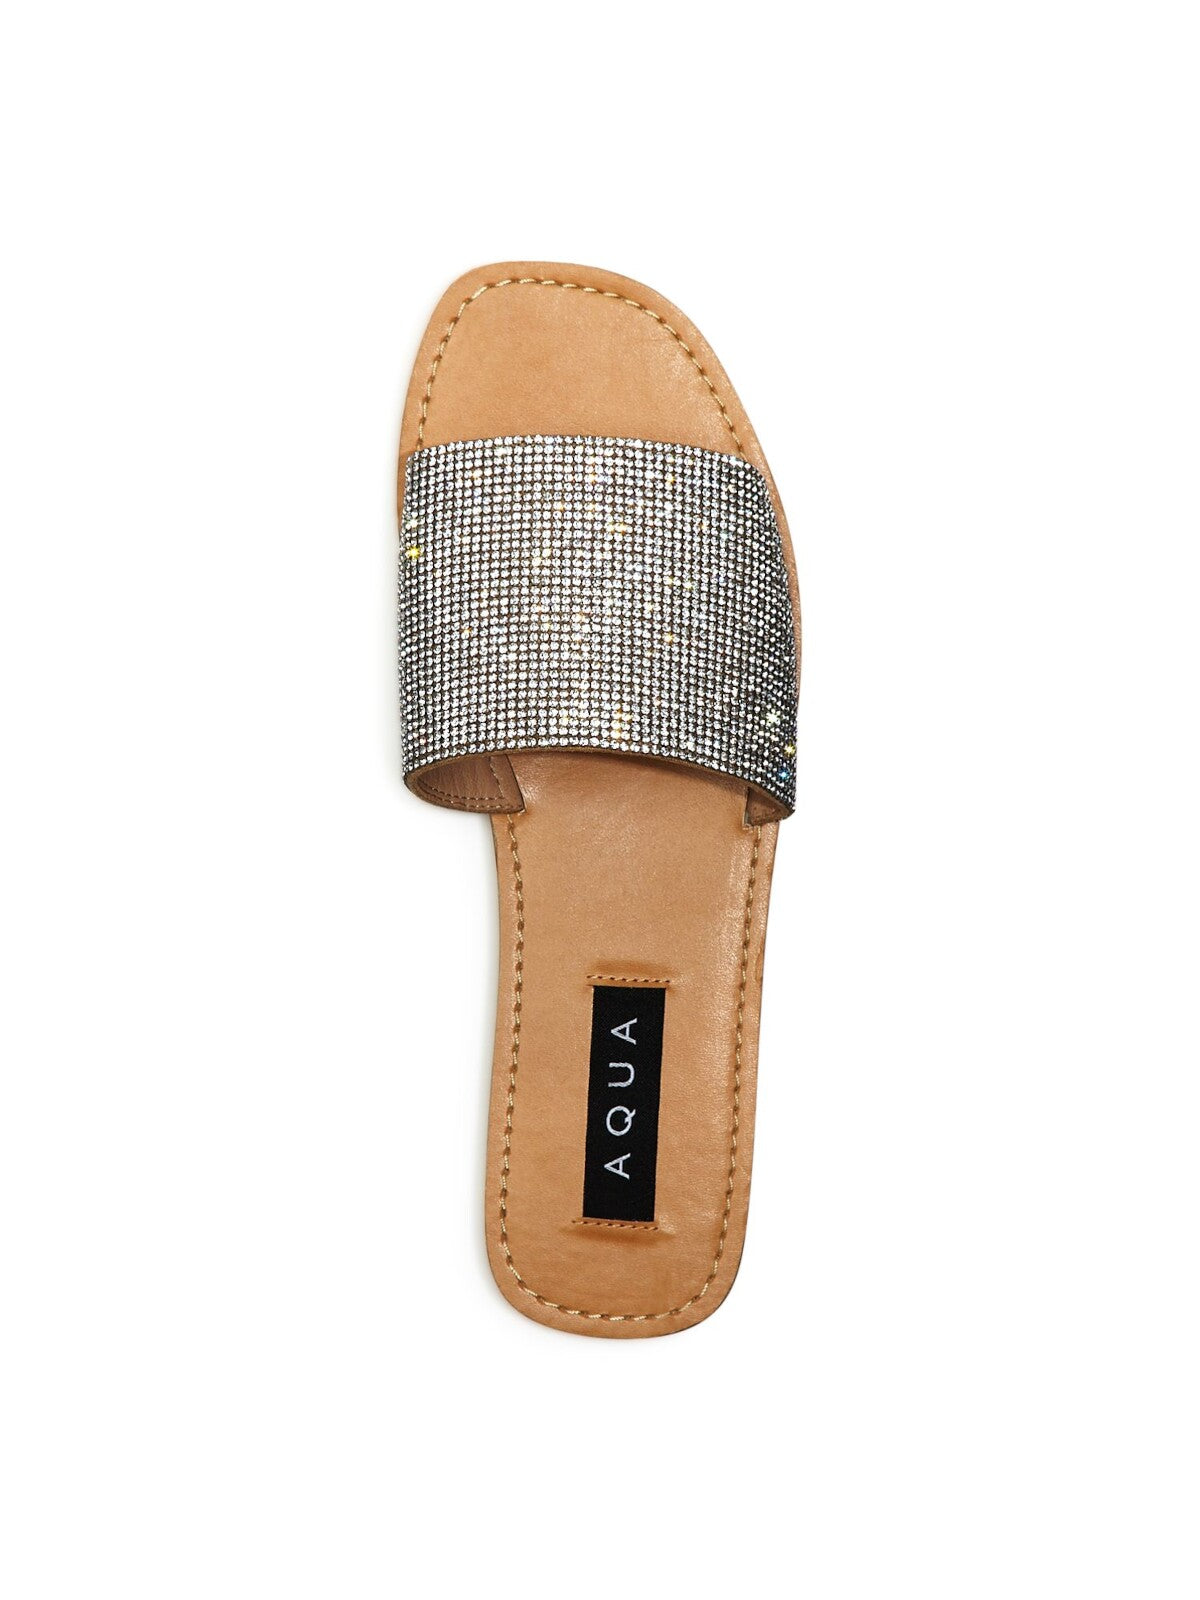 AQUA Womens Silver Embellished Shine Round Toe Slip On Slide Sandals Shoes 6.5 M